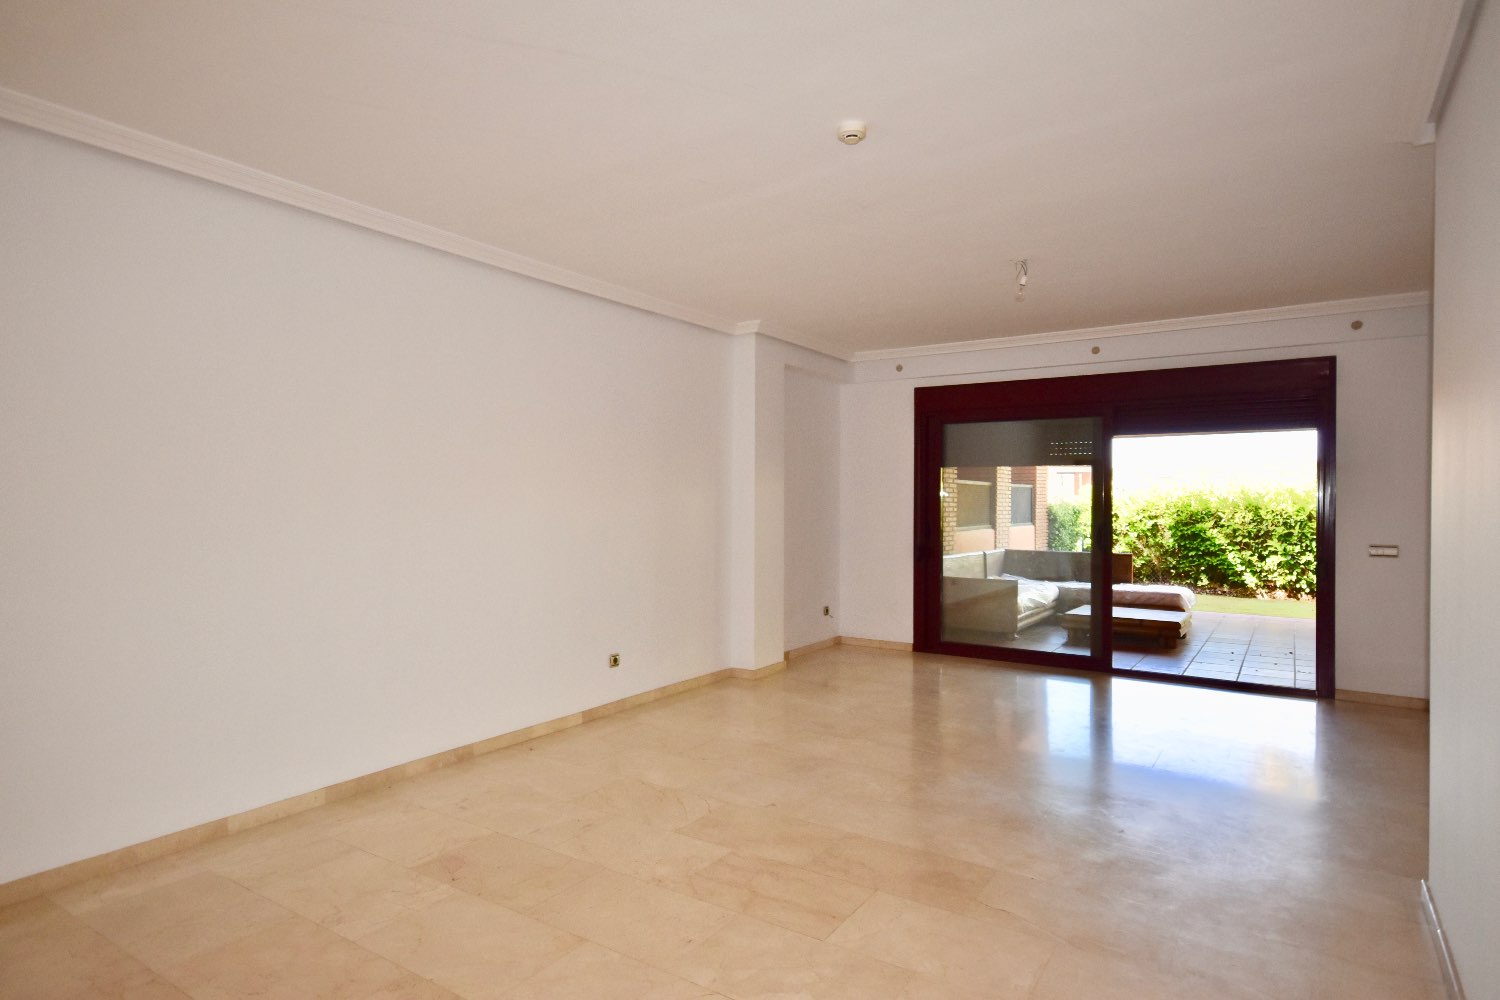 Ground floor apartment with private garden in Casares Golf